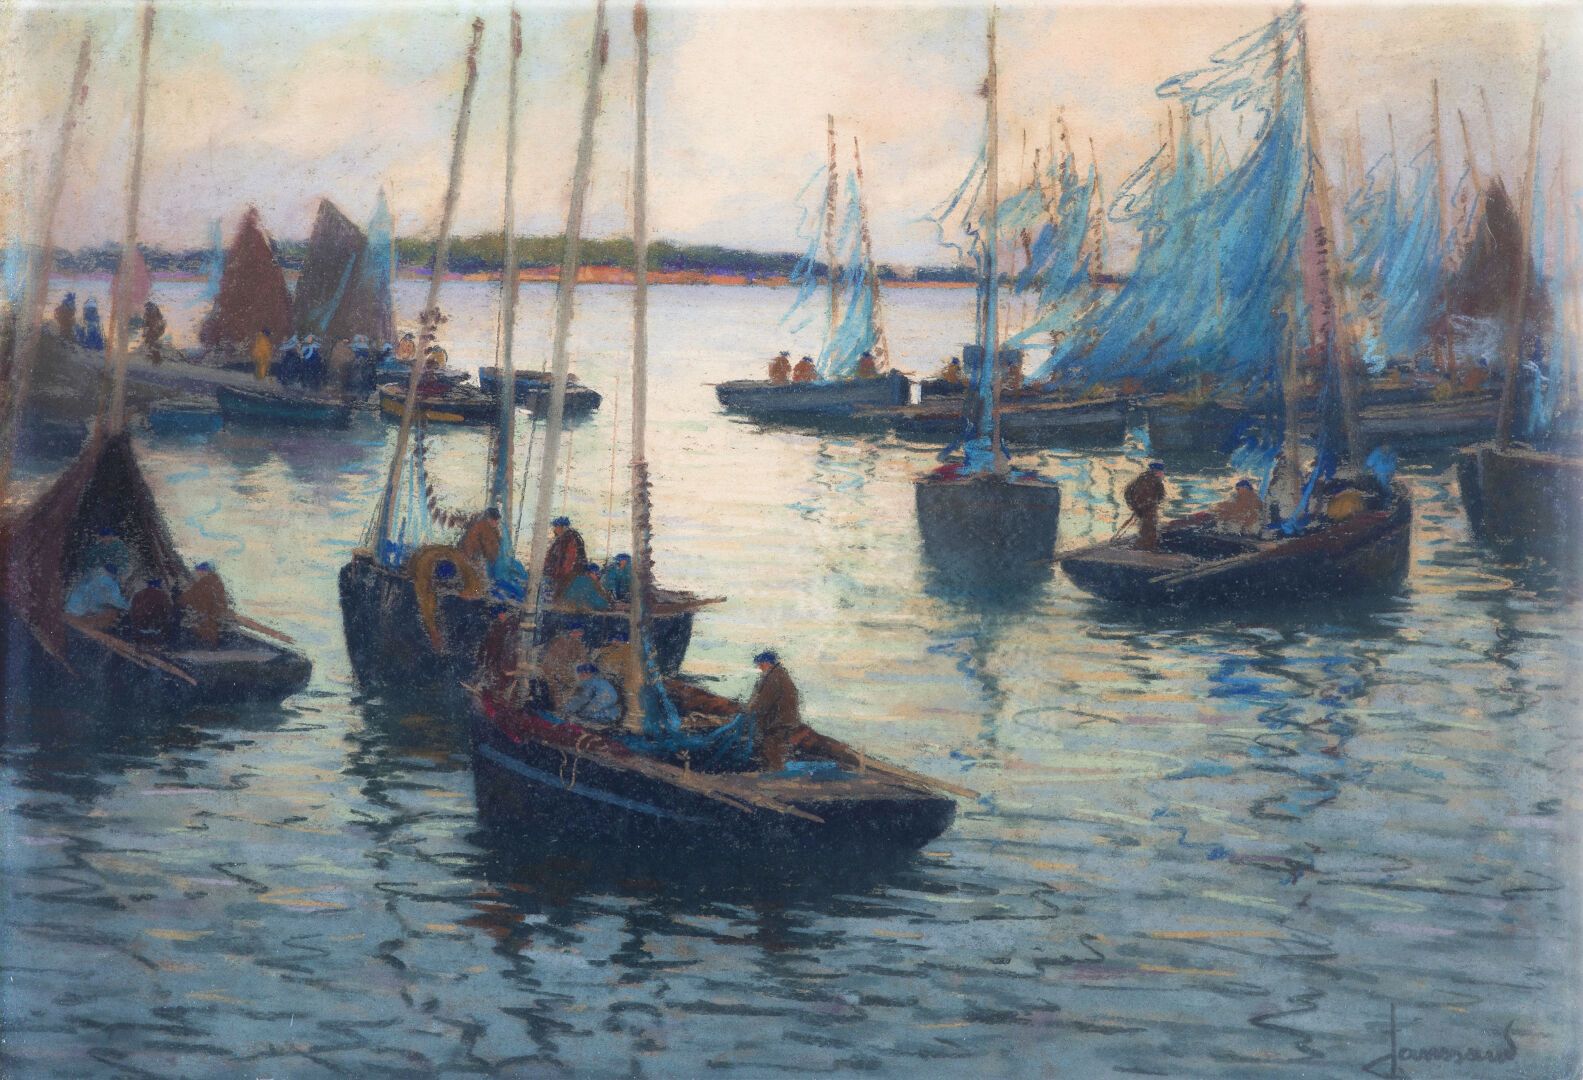 Null 马图林-扬苏德 (1857 -1940)
帆船
粉彩画
右下方有签名
37,5 x 56,5 cm